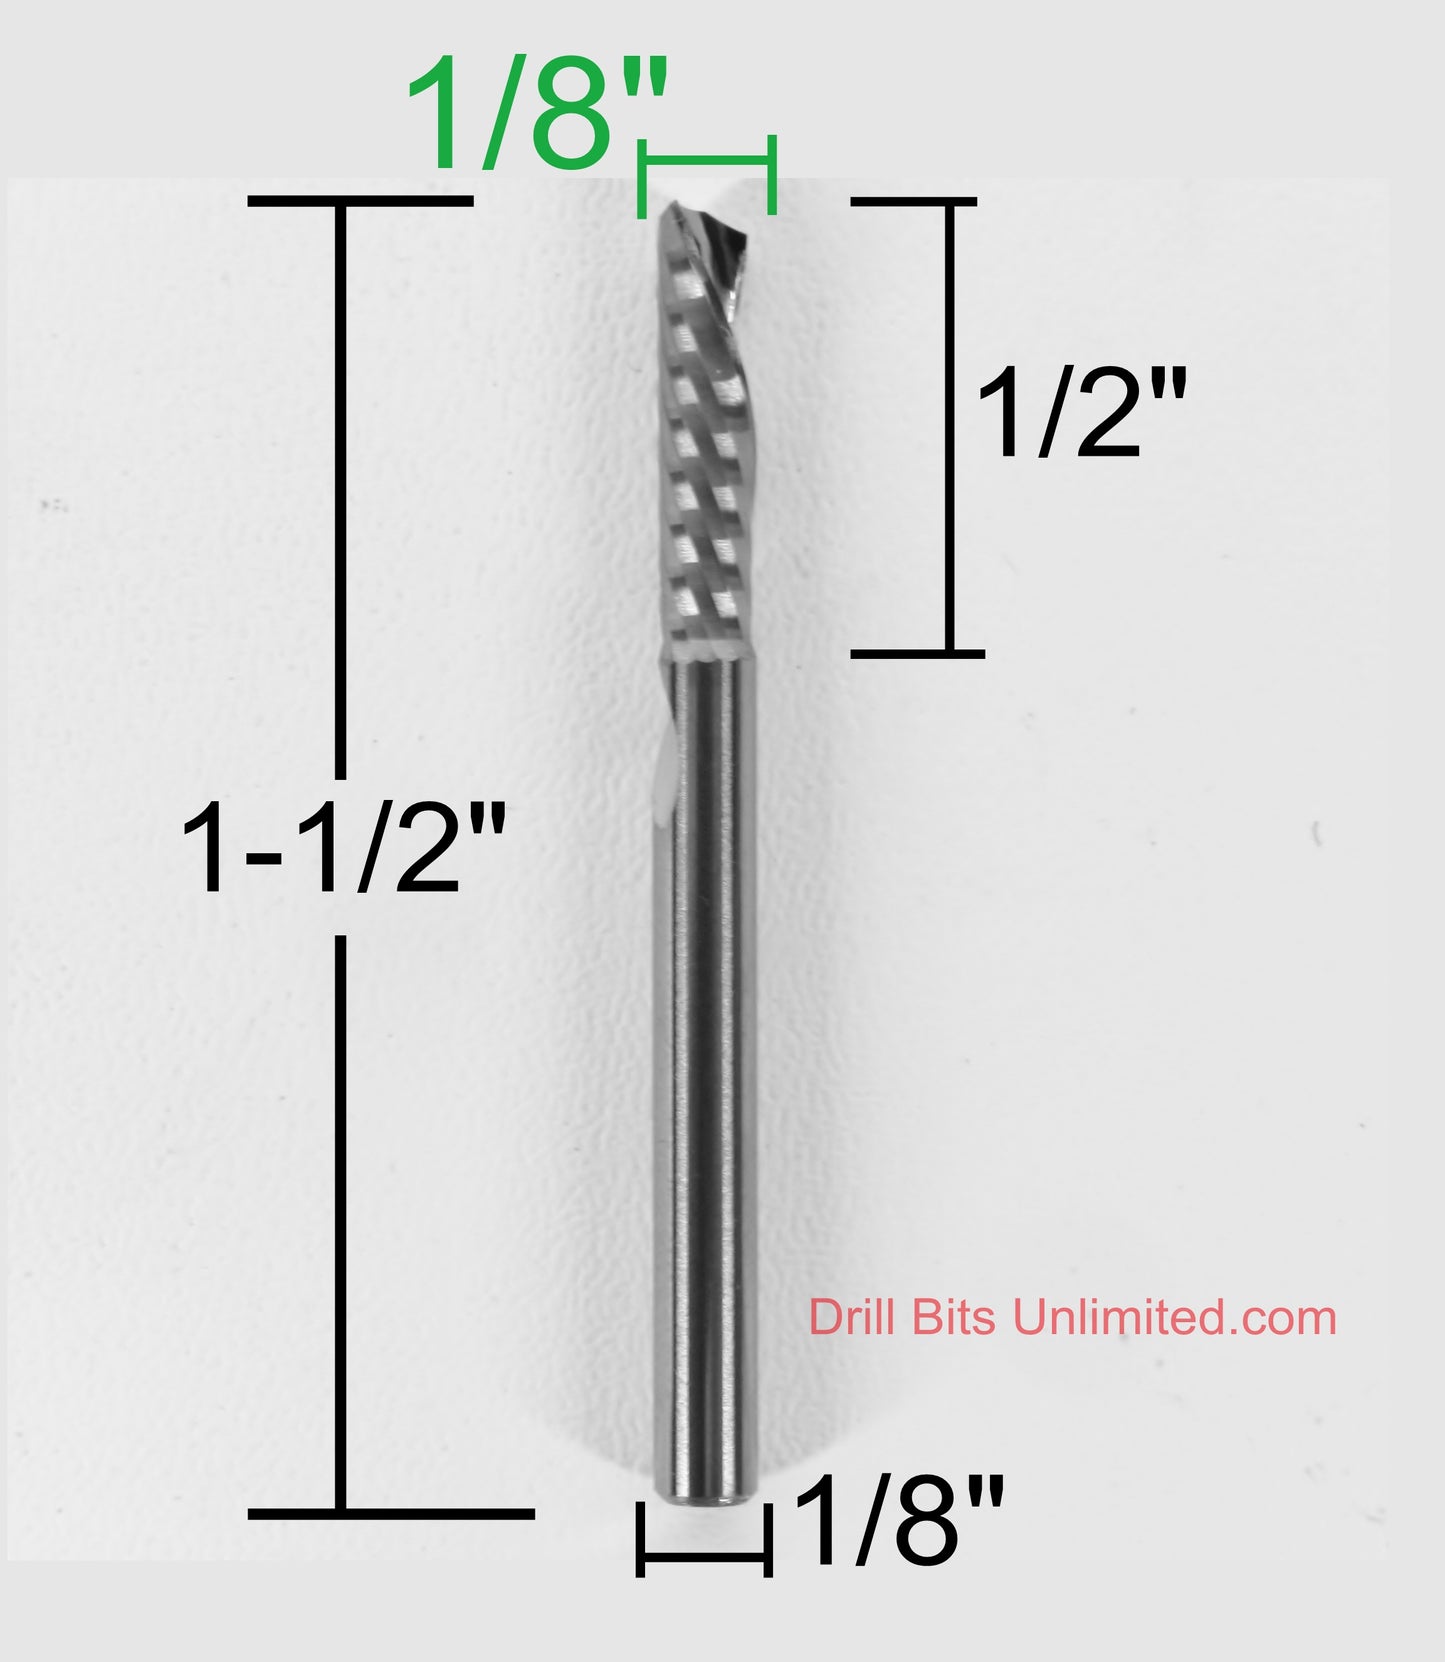 1/8" x 0.5" Down Cut Premium Quality Single O-flute End Mill Made in USA - Aluminum Acrylic Plastic M231